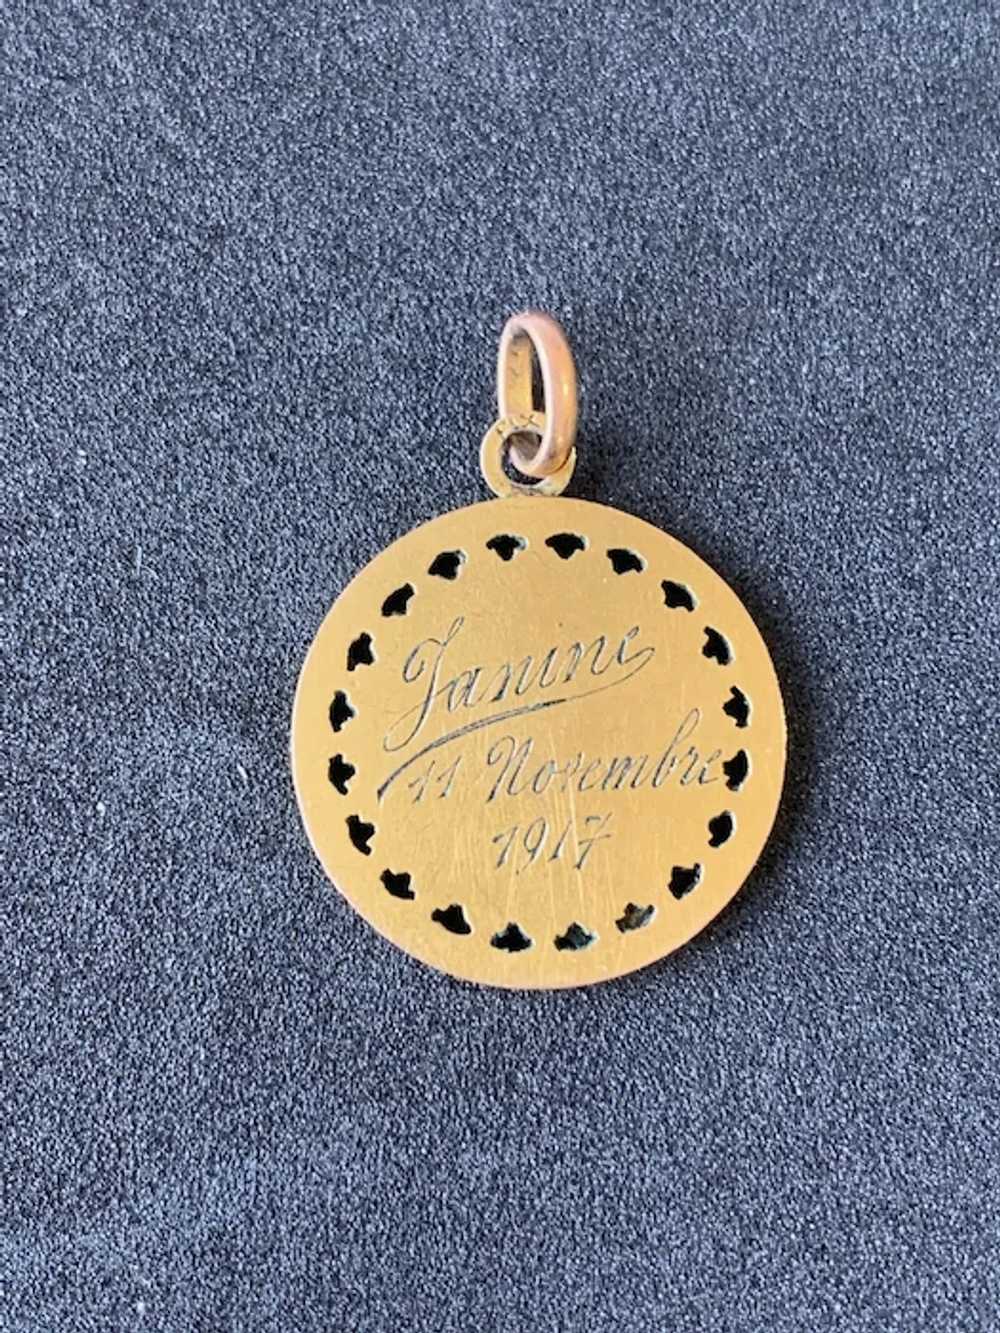 French 18 K gold filled FIX medal - image 2